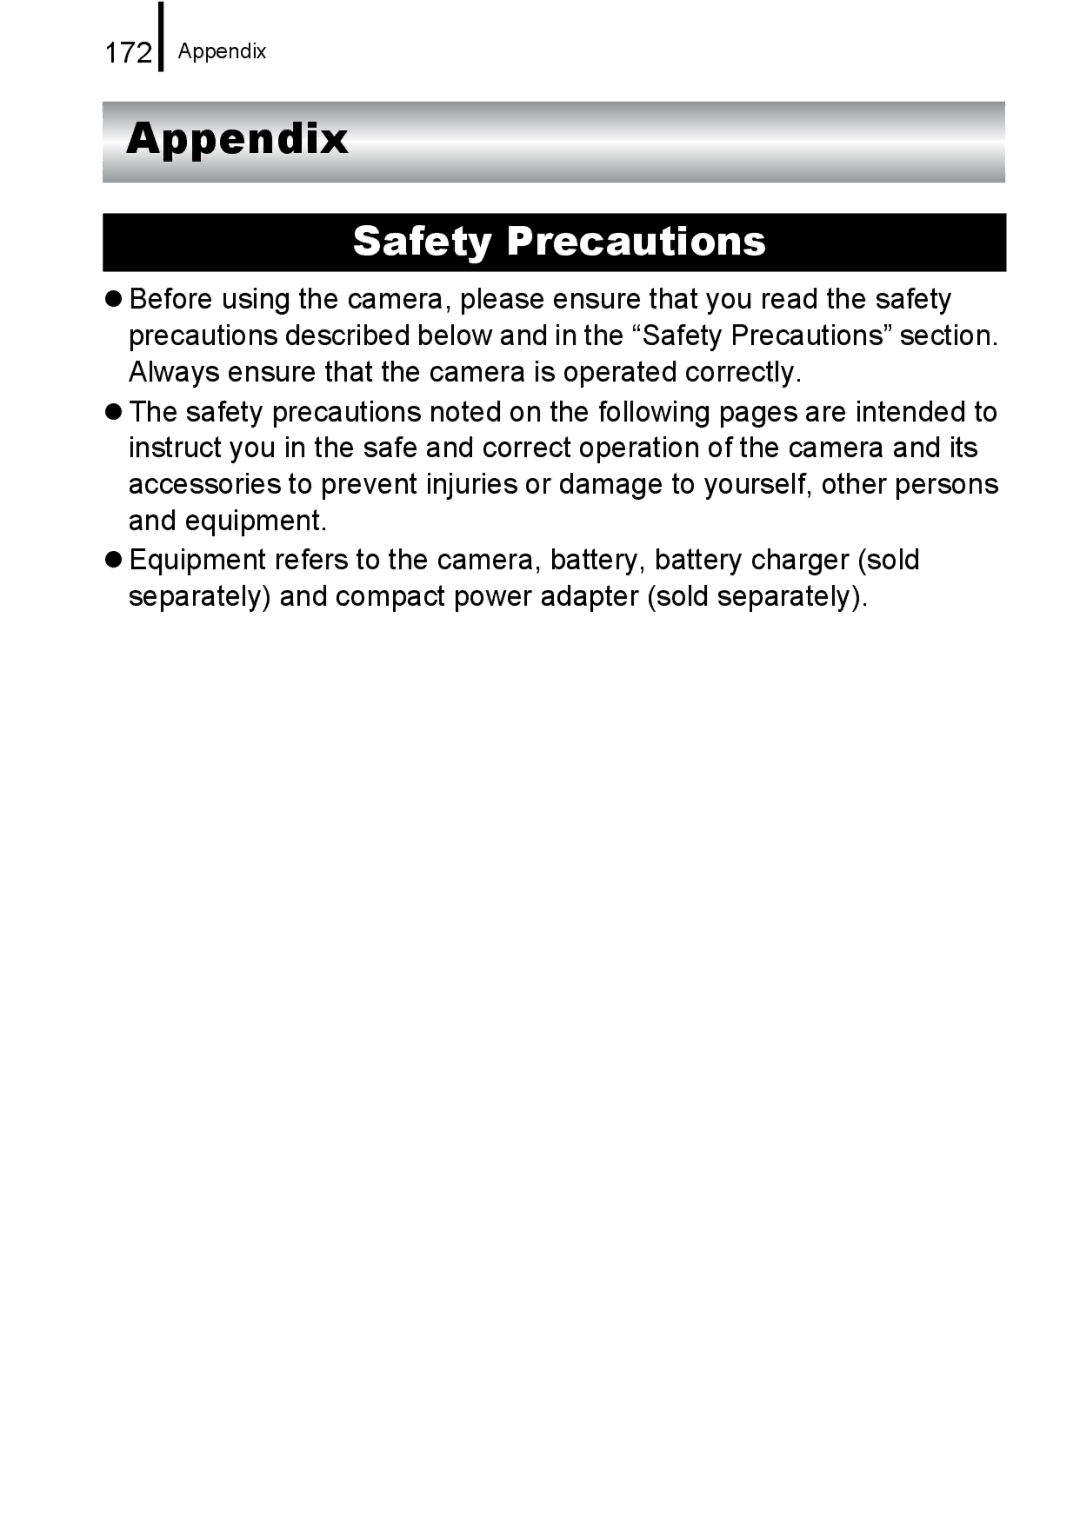 Canon A650 IS appendix Appendix, Safety Precautions, 172 